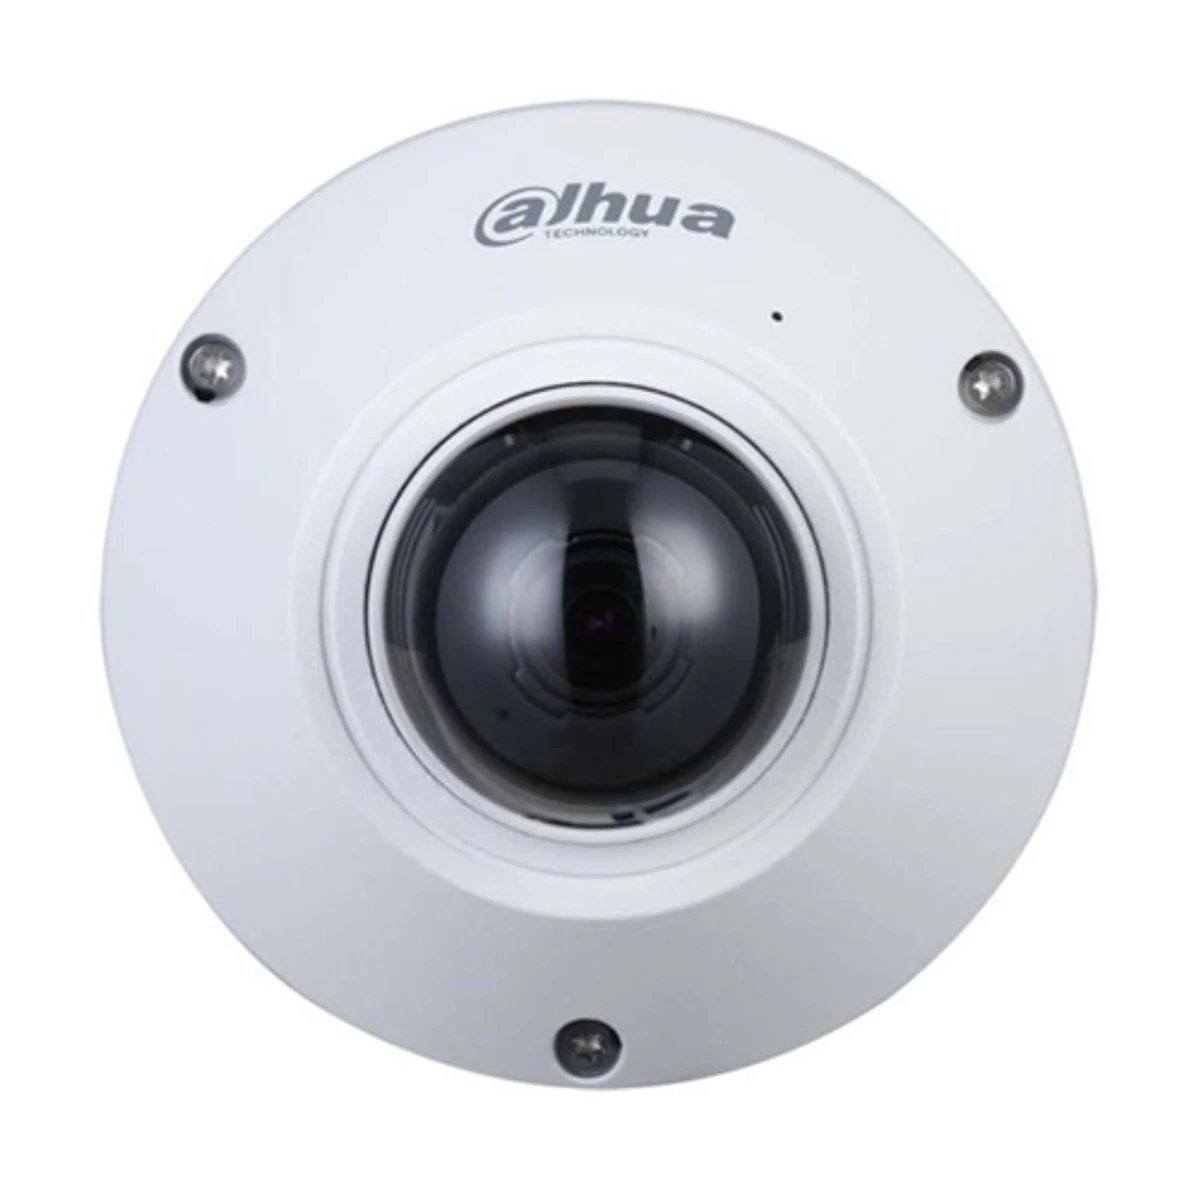 Dahua DH-IPC-EB5541-AS 5MP IP Fisheye Camera